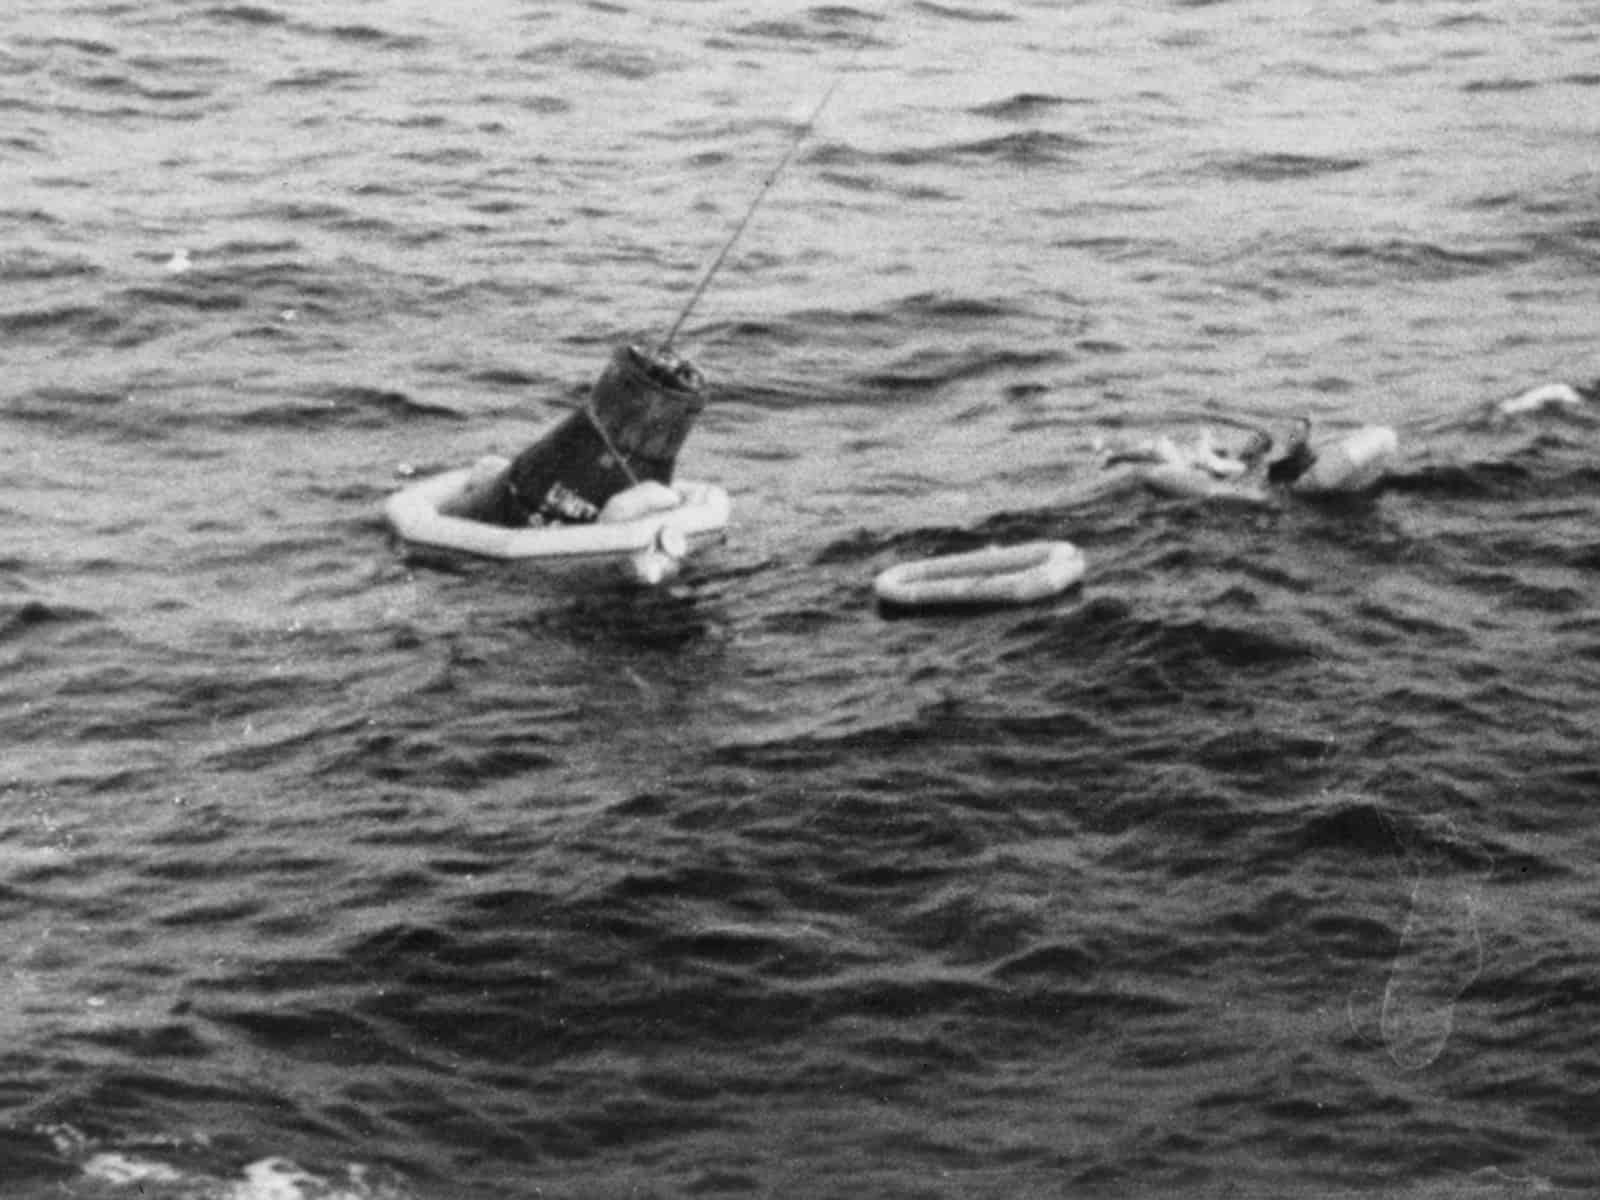 Scott Carpenter Bergung nach der Landung aus dem Ozean (C) Nasa